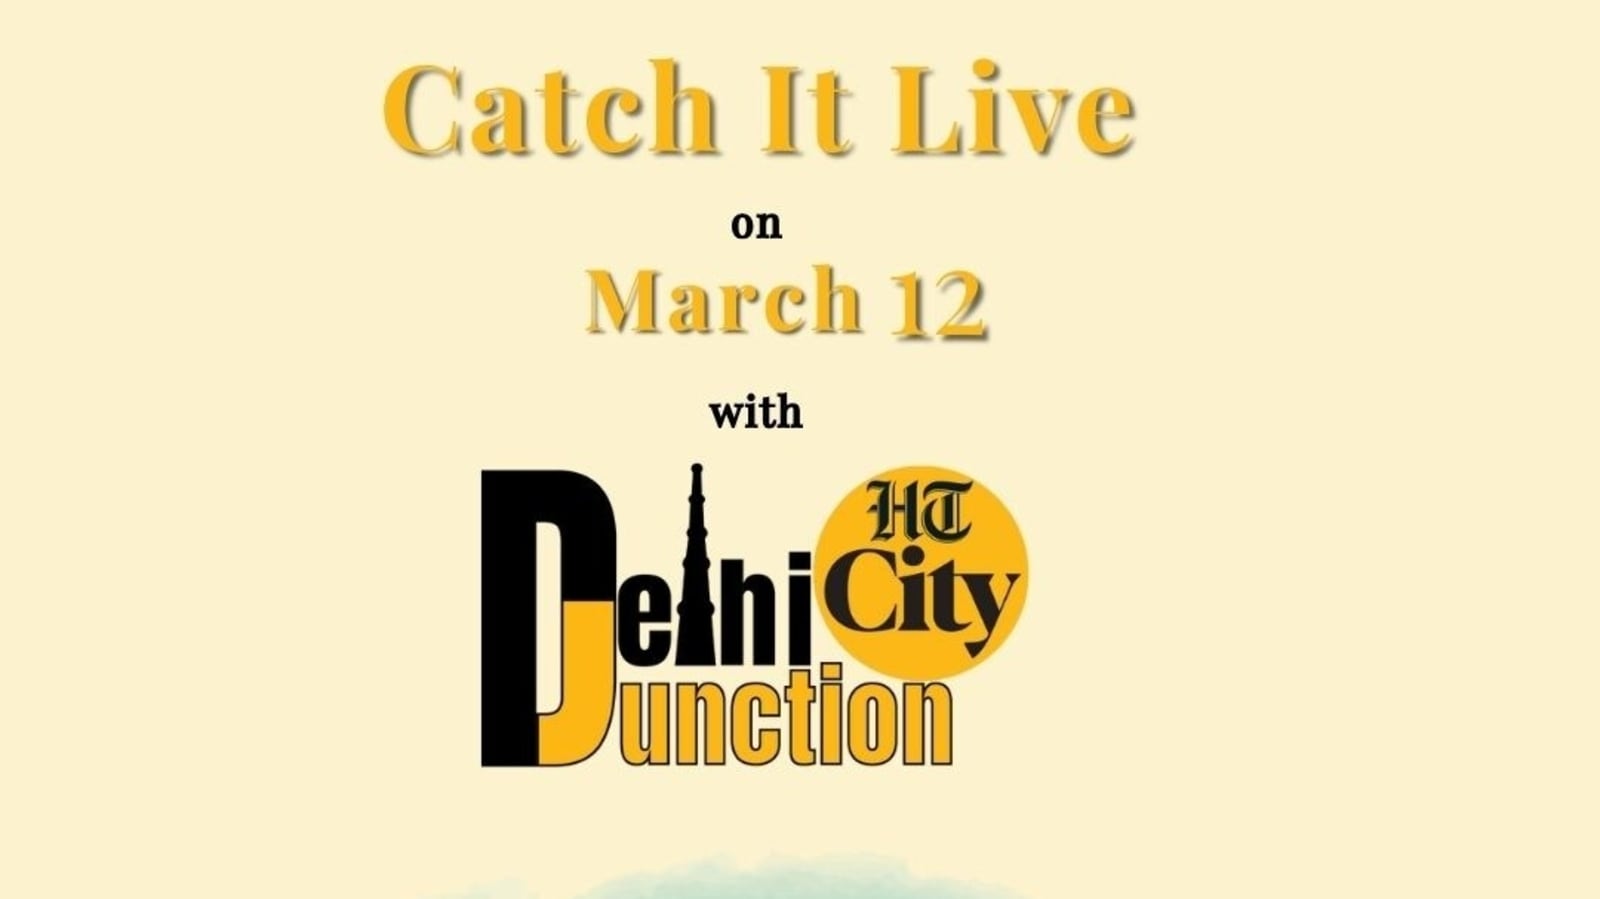 HT City Delhi Junction: Catch It Live on March 12